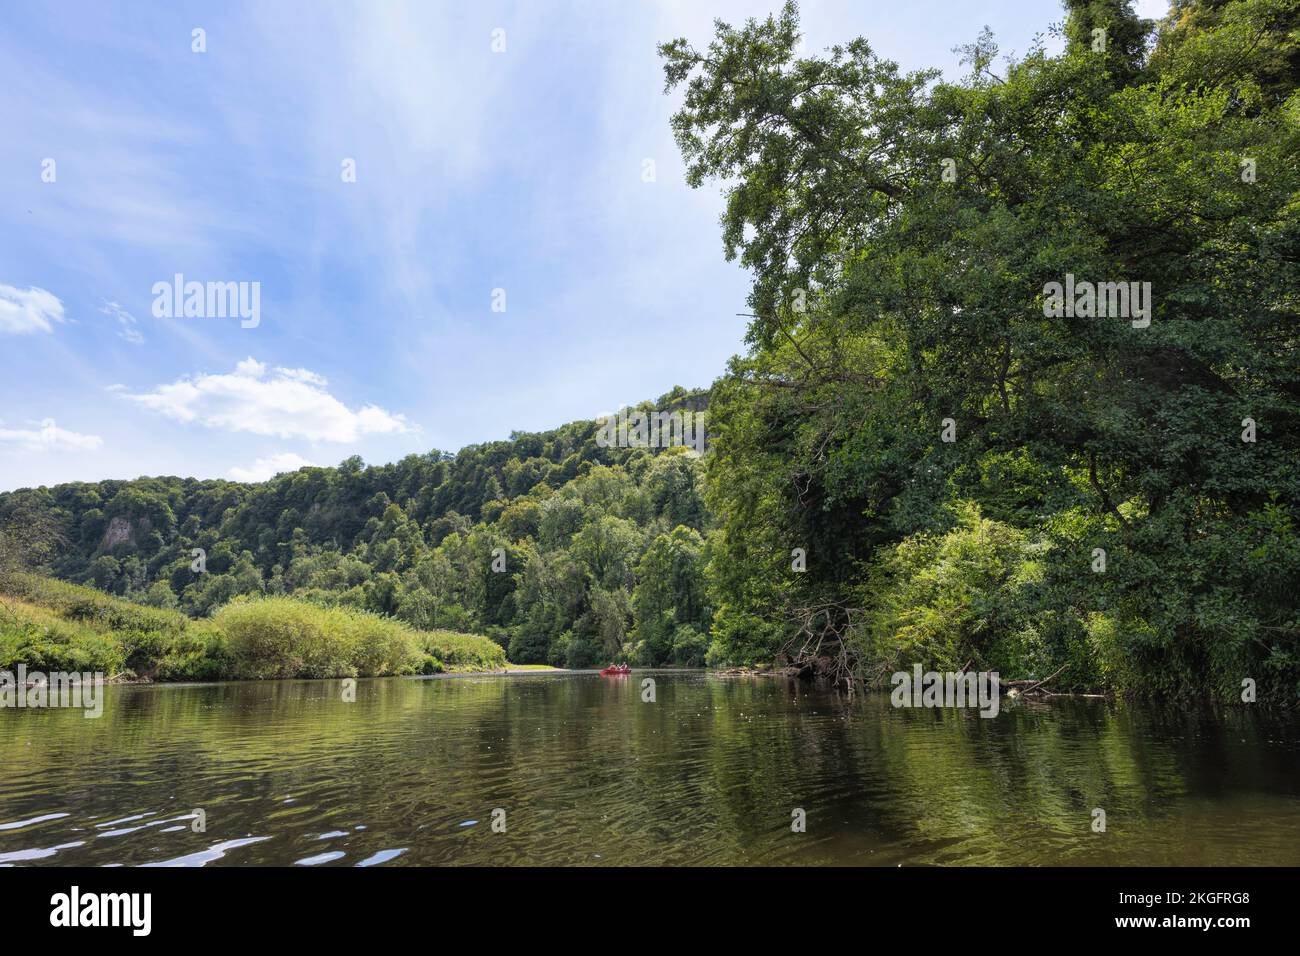 River Wye, Gloucestershire, England. Stock Photo